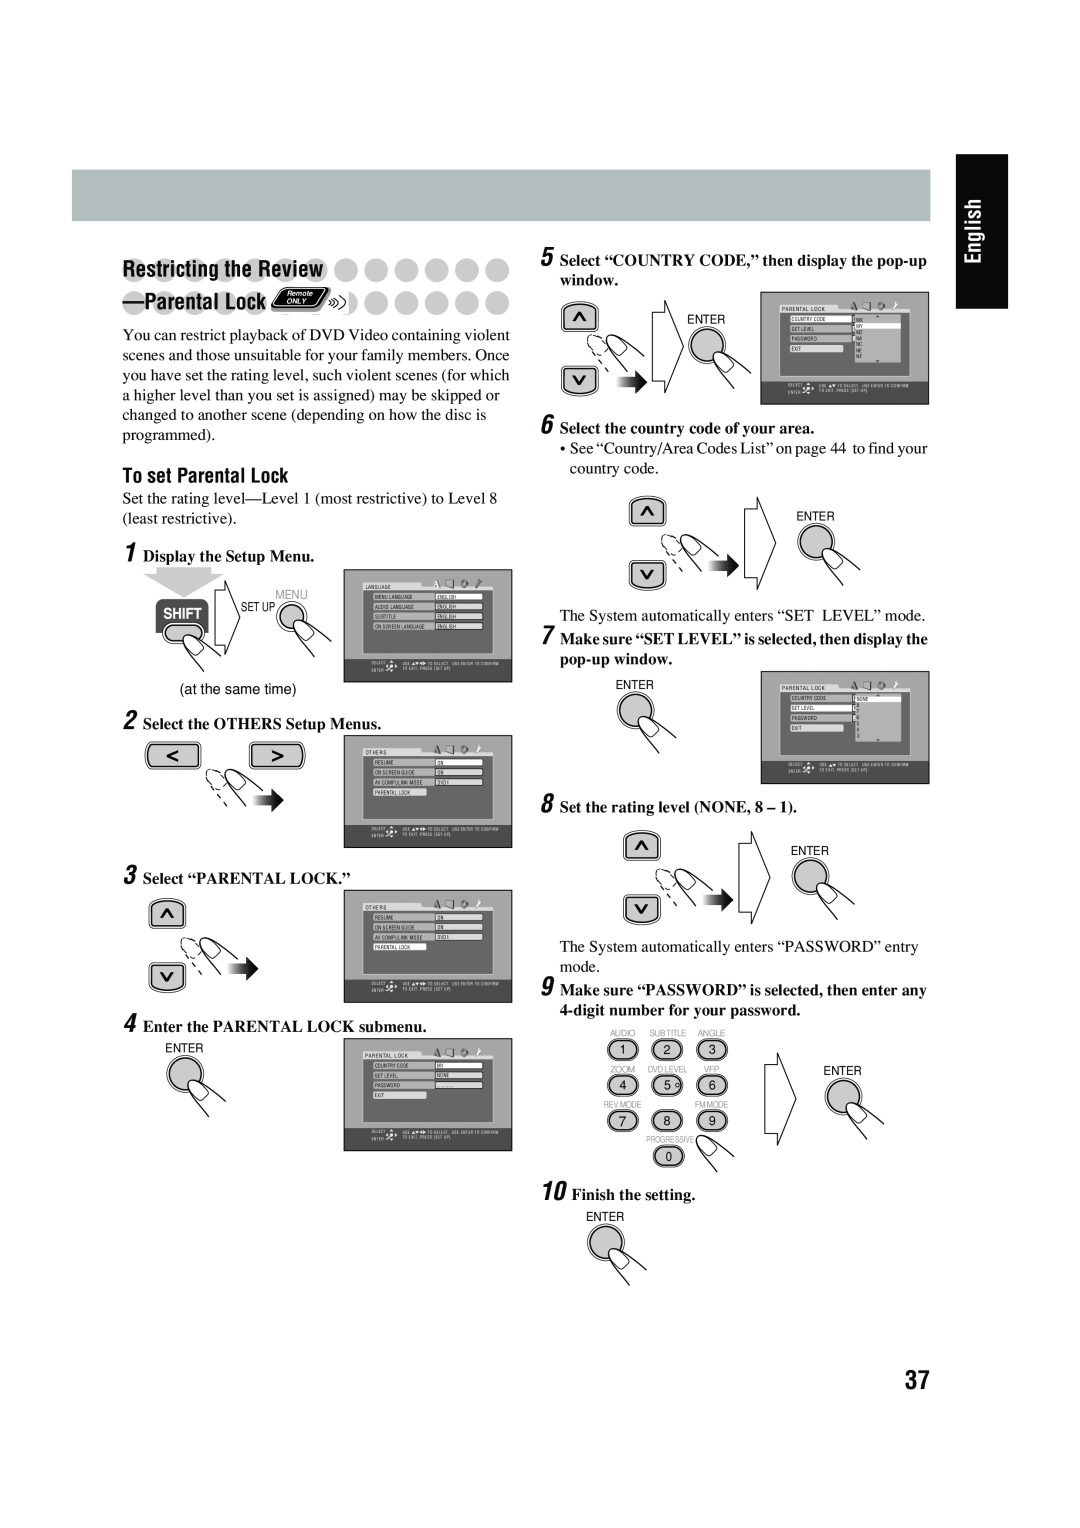 JVC UX-P450 manual Restricting the Review, ParentalLock ONLY, To set Parental Lock, English, Display the Setup Menu 